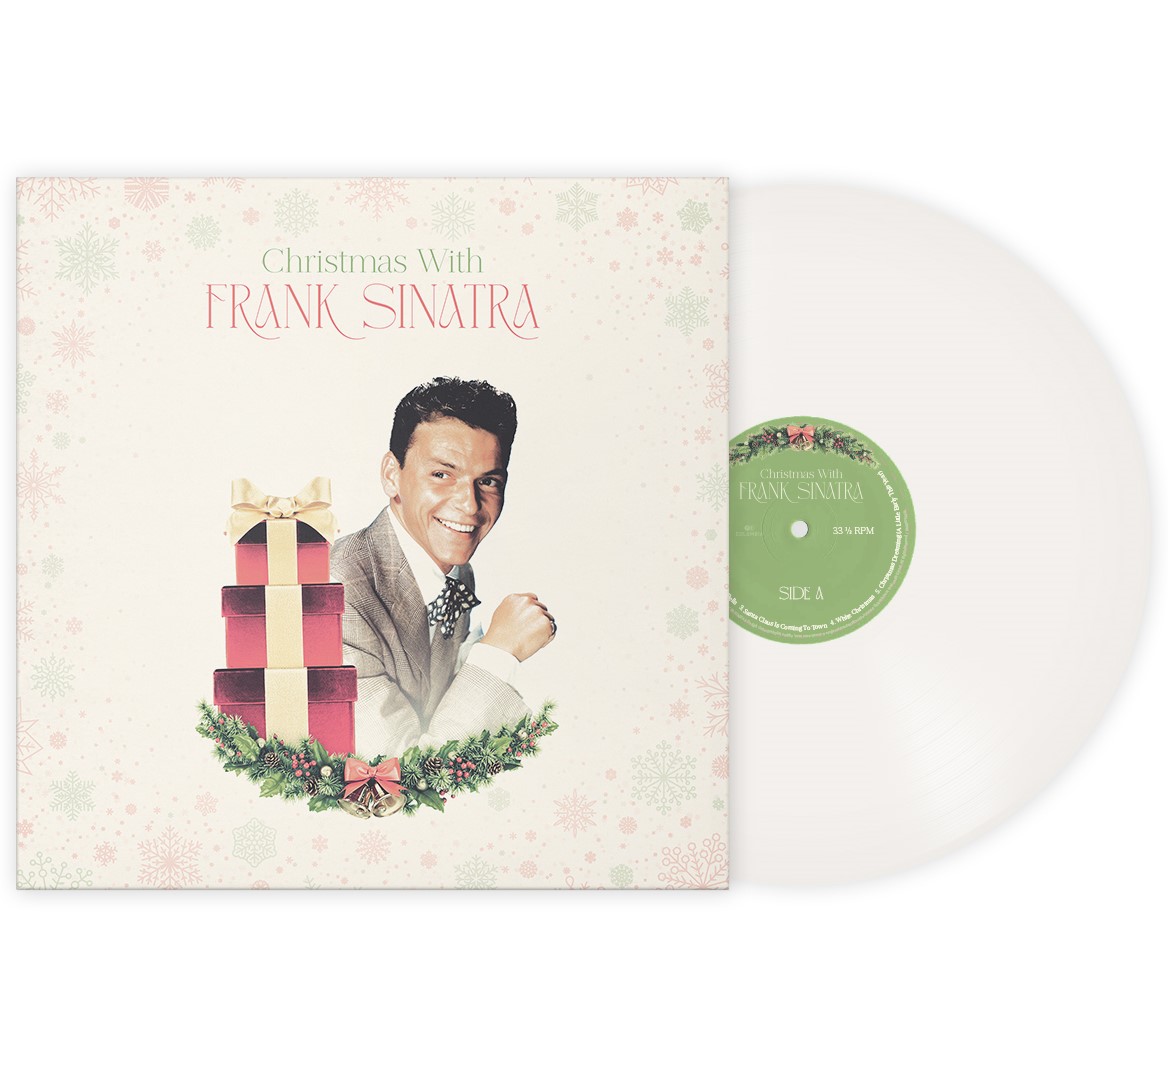 Frank Sinatra - Christmas With Frank Sinatra (Opaque White Vinyl)